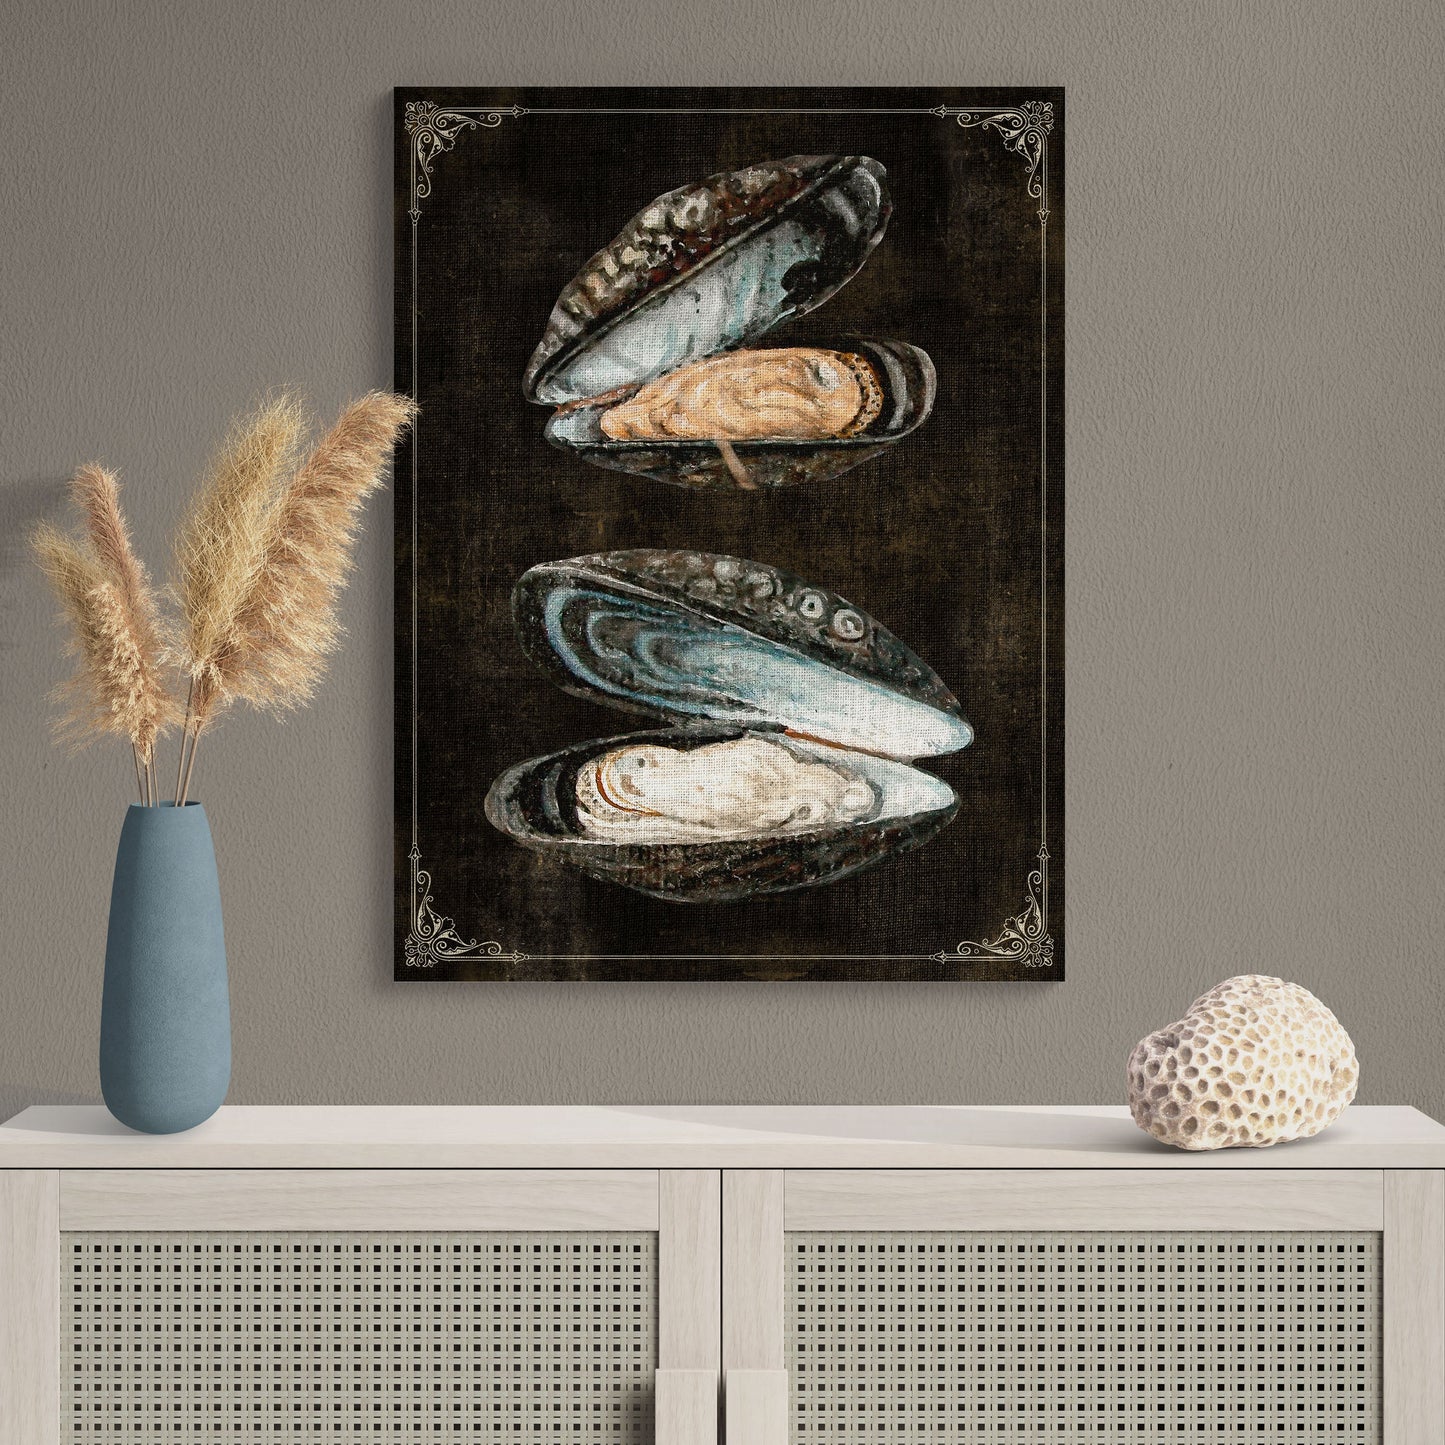 Mussel Shells Natural History Illustration Coastal Wall Art - Retro Reverence